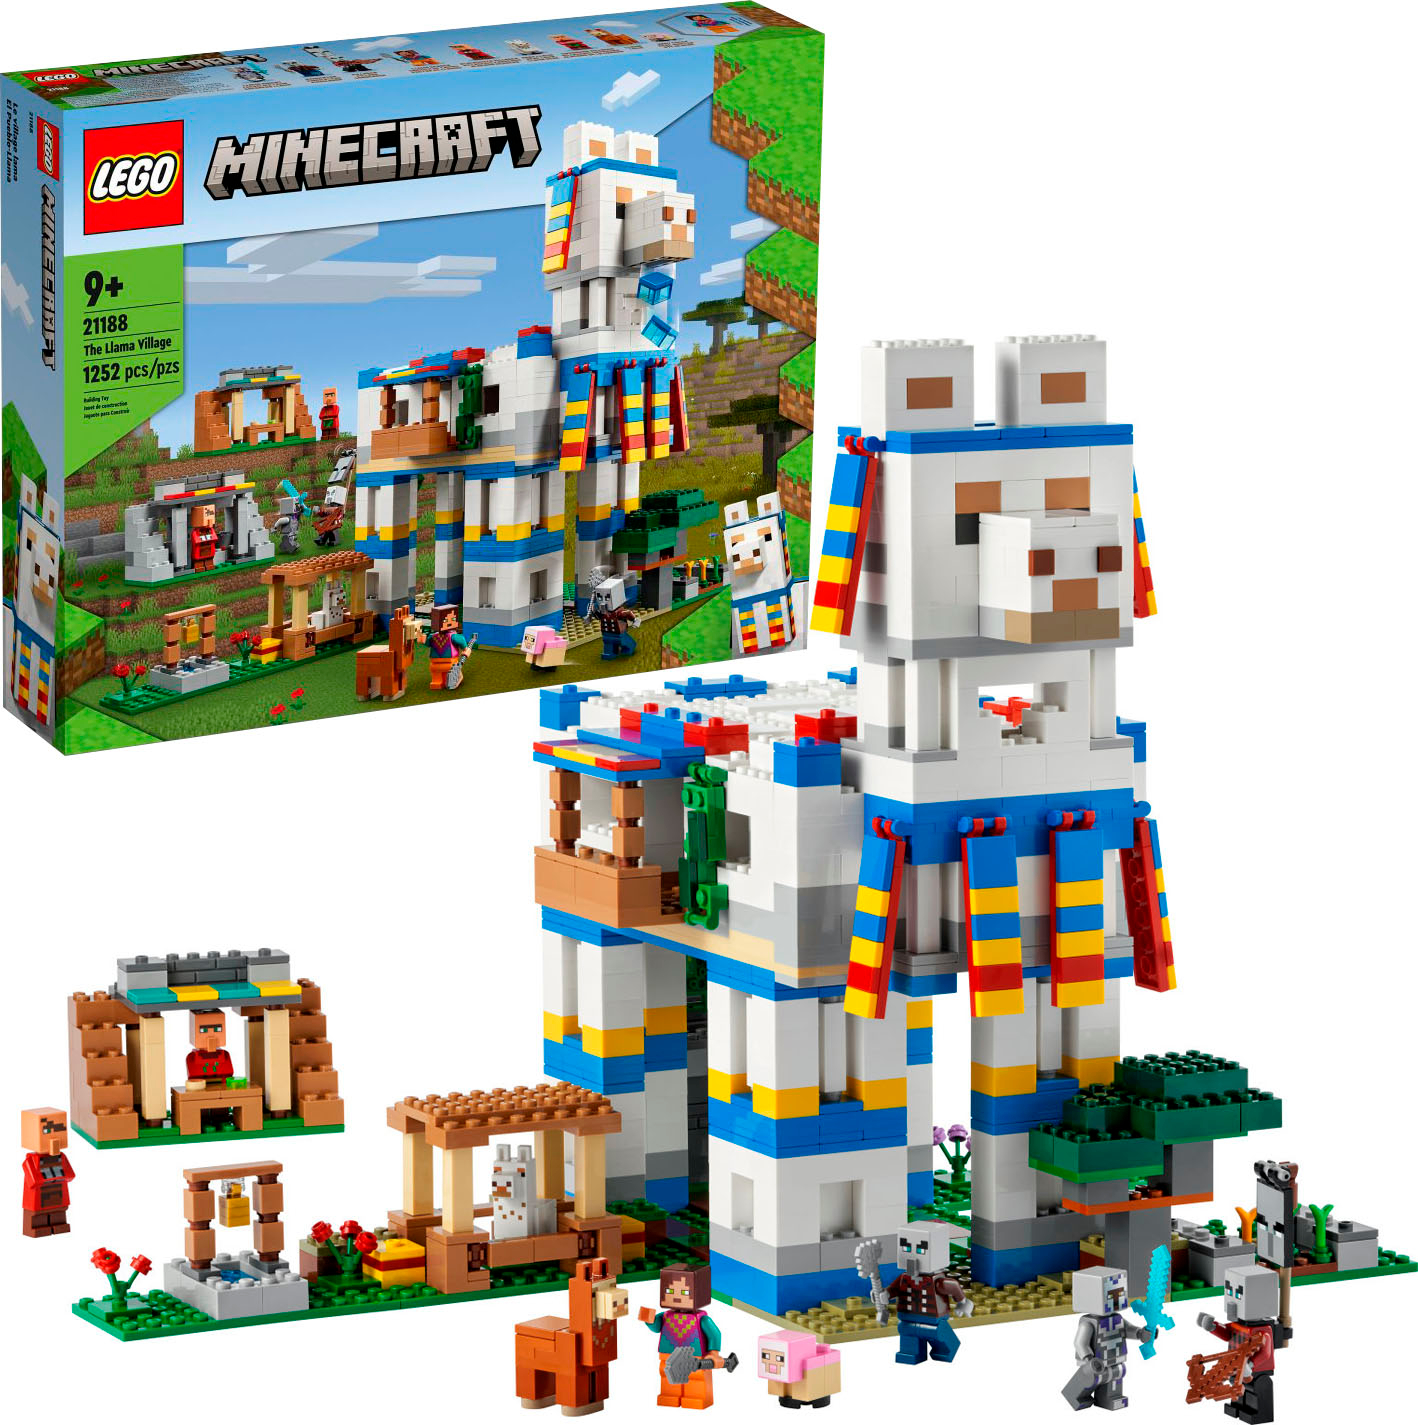 kunst Overleven bron LEGO Minecraft The Llama Village 21188 6379582 - Best Buy